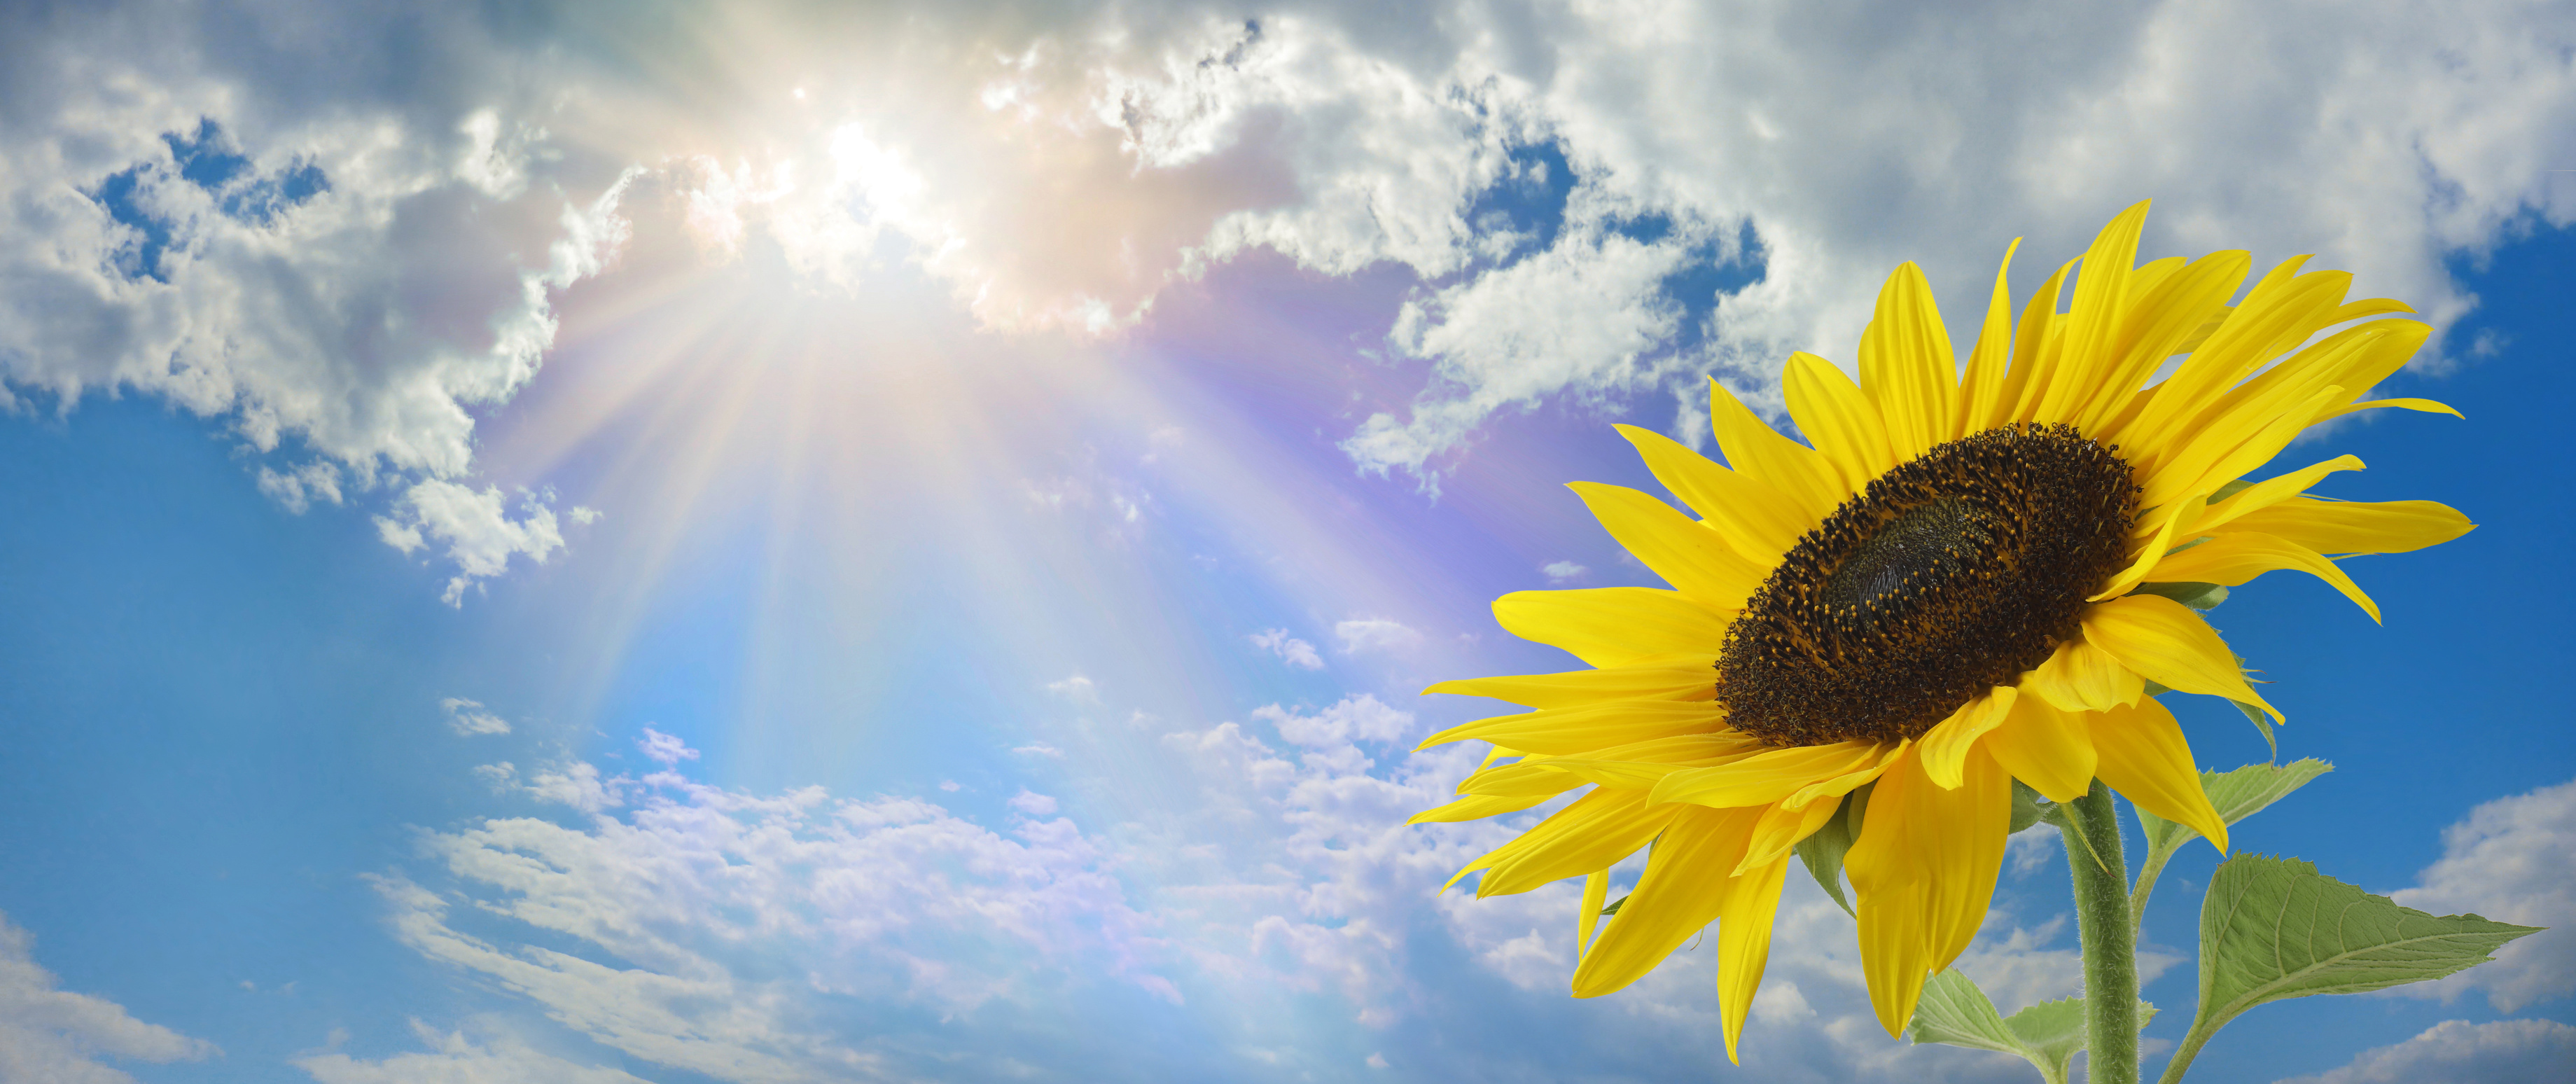 Beautiful sunflower sunshine message background